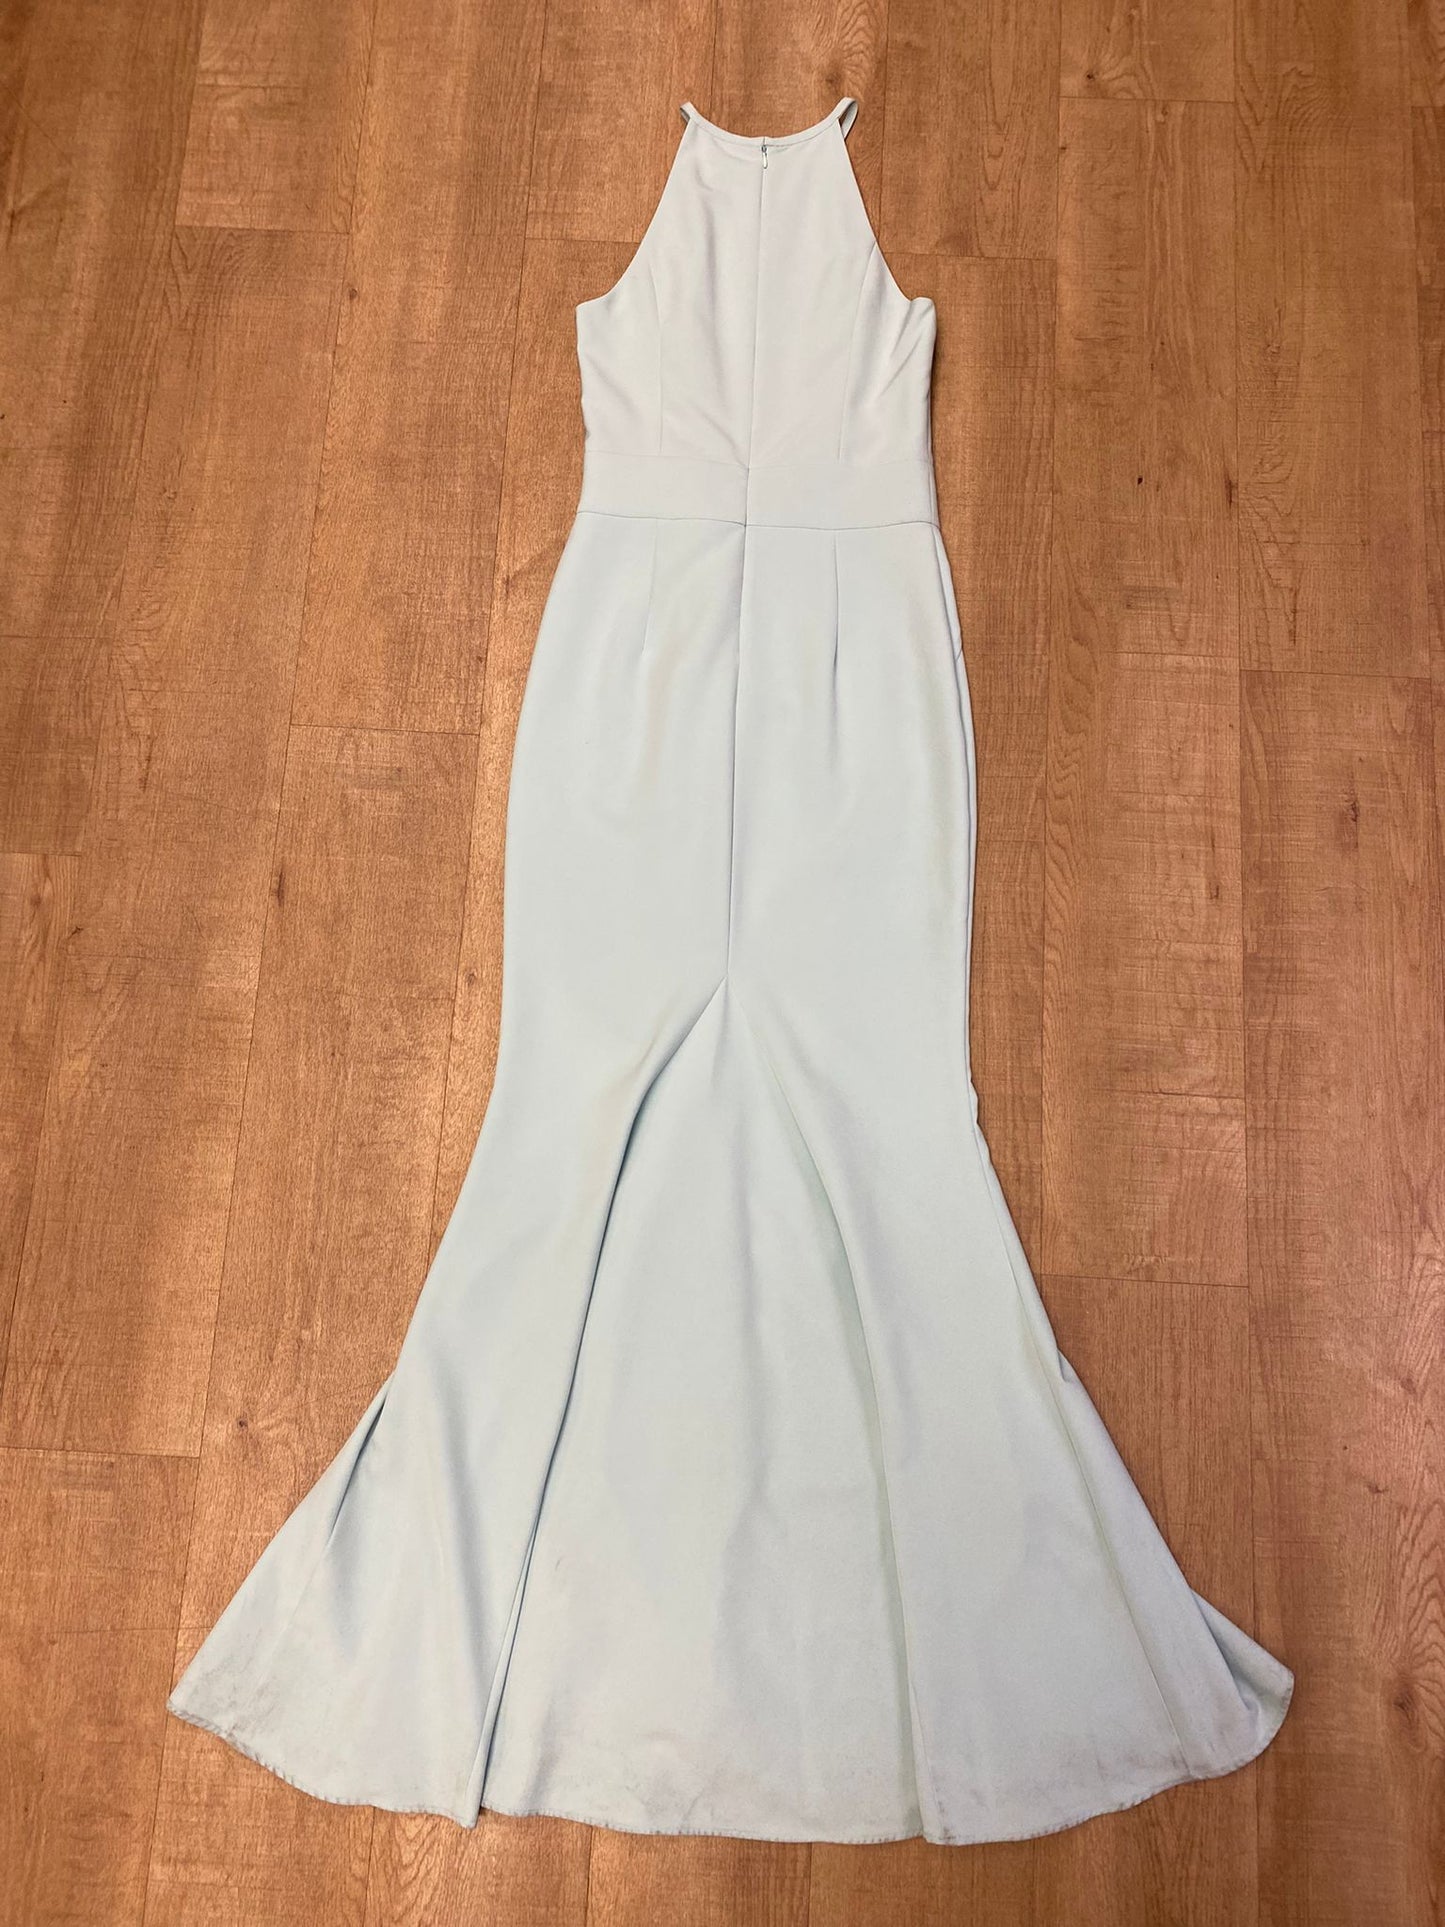 Jarlo Light Blue Mermaid Evening Dress Size 10T